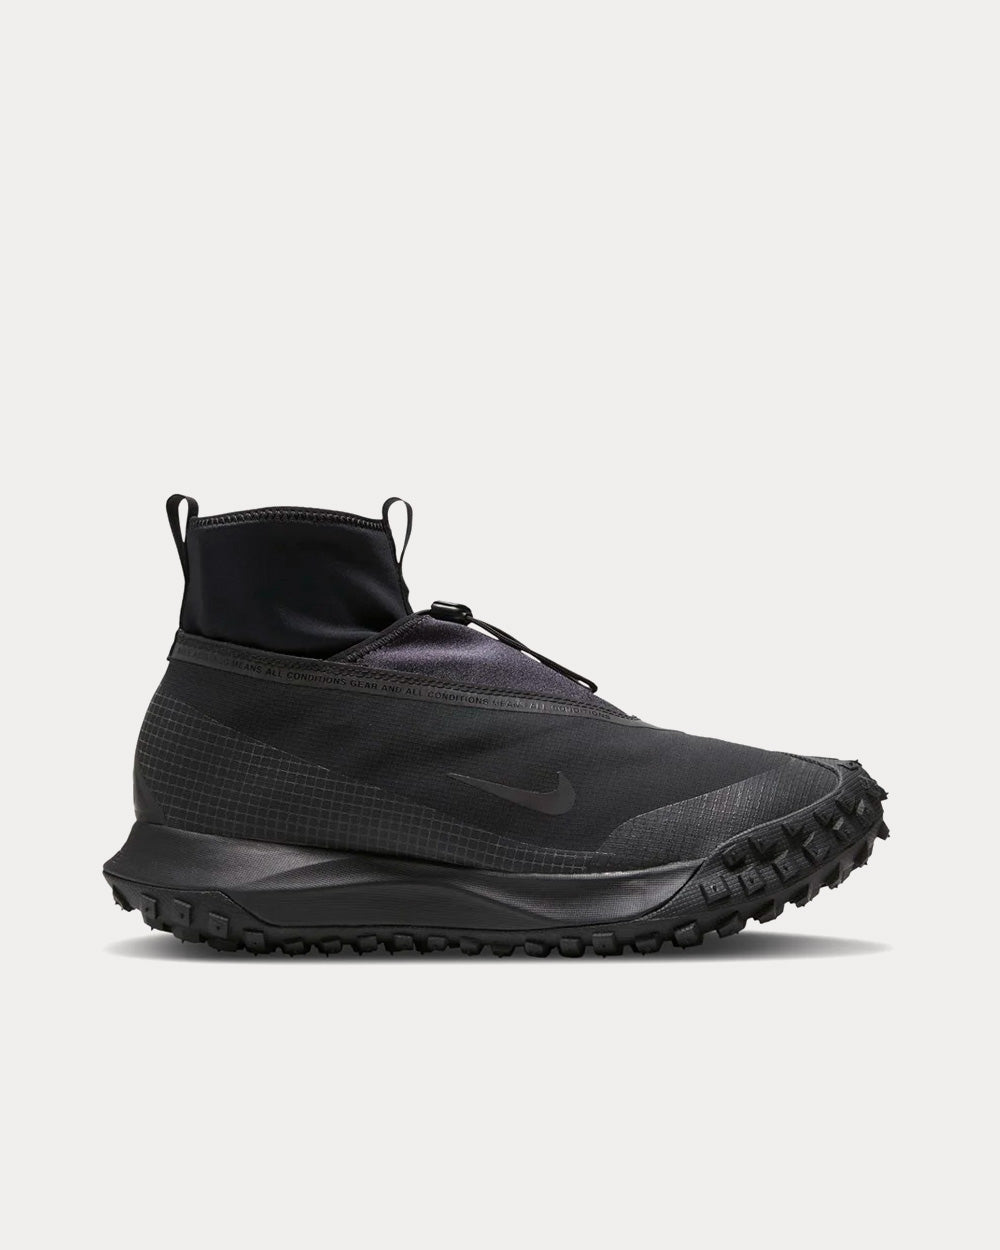 Nike - ACG Mountain Fly GORE-TEX Black / Dark Grey High Top Sneakers